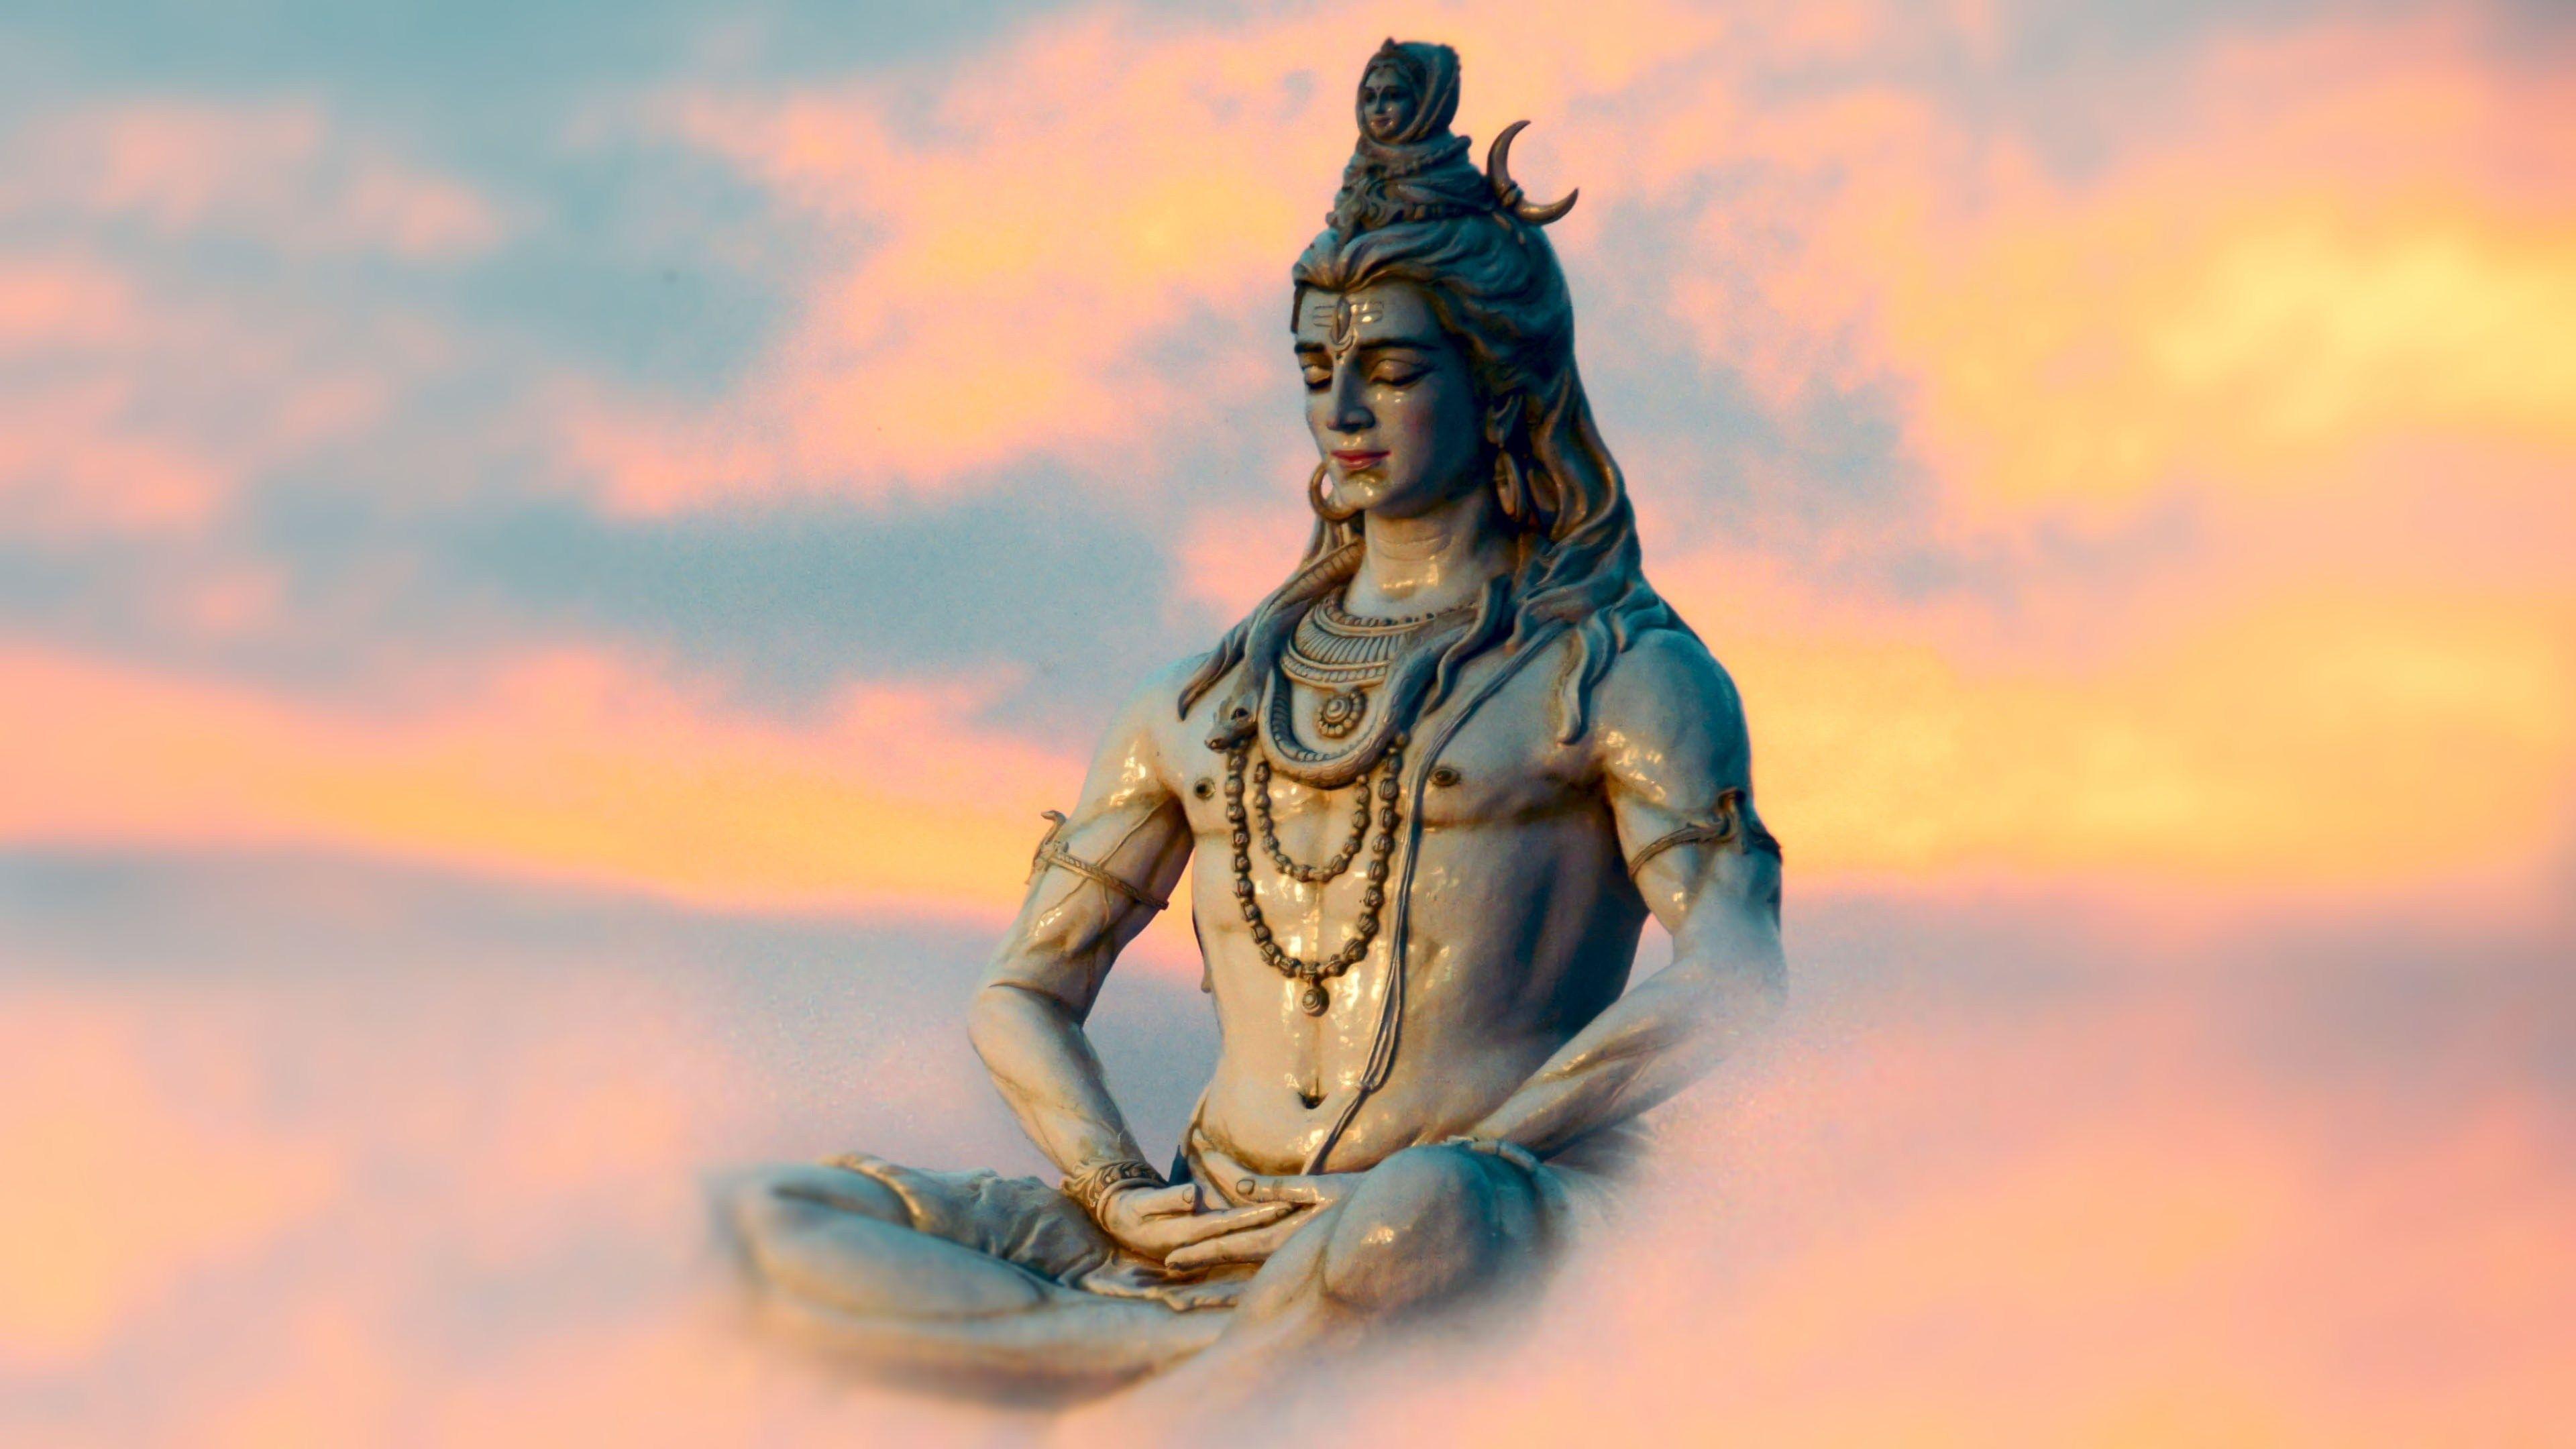 Lord Shiva Image, Photo and HD Wallpaper